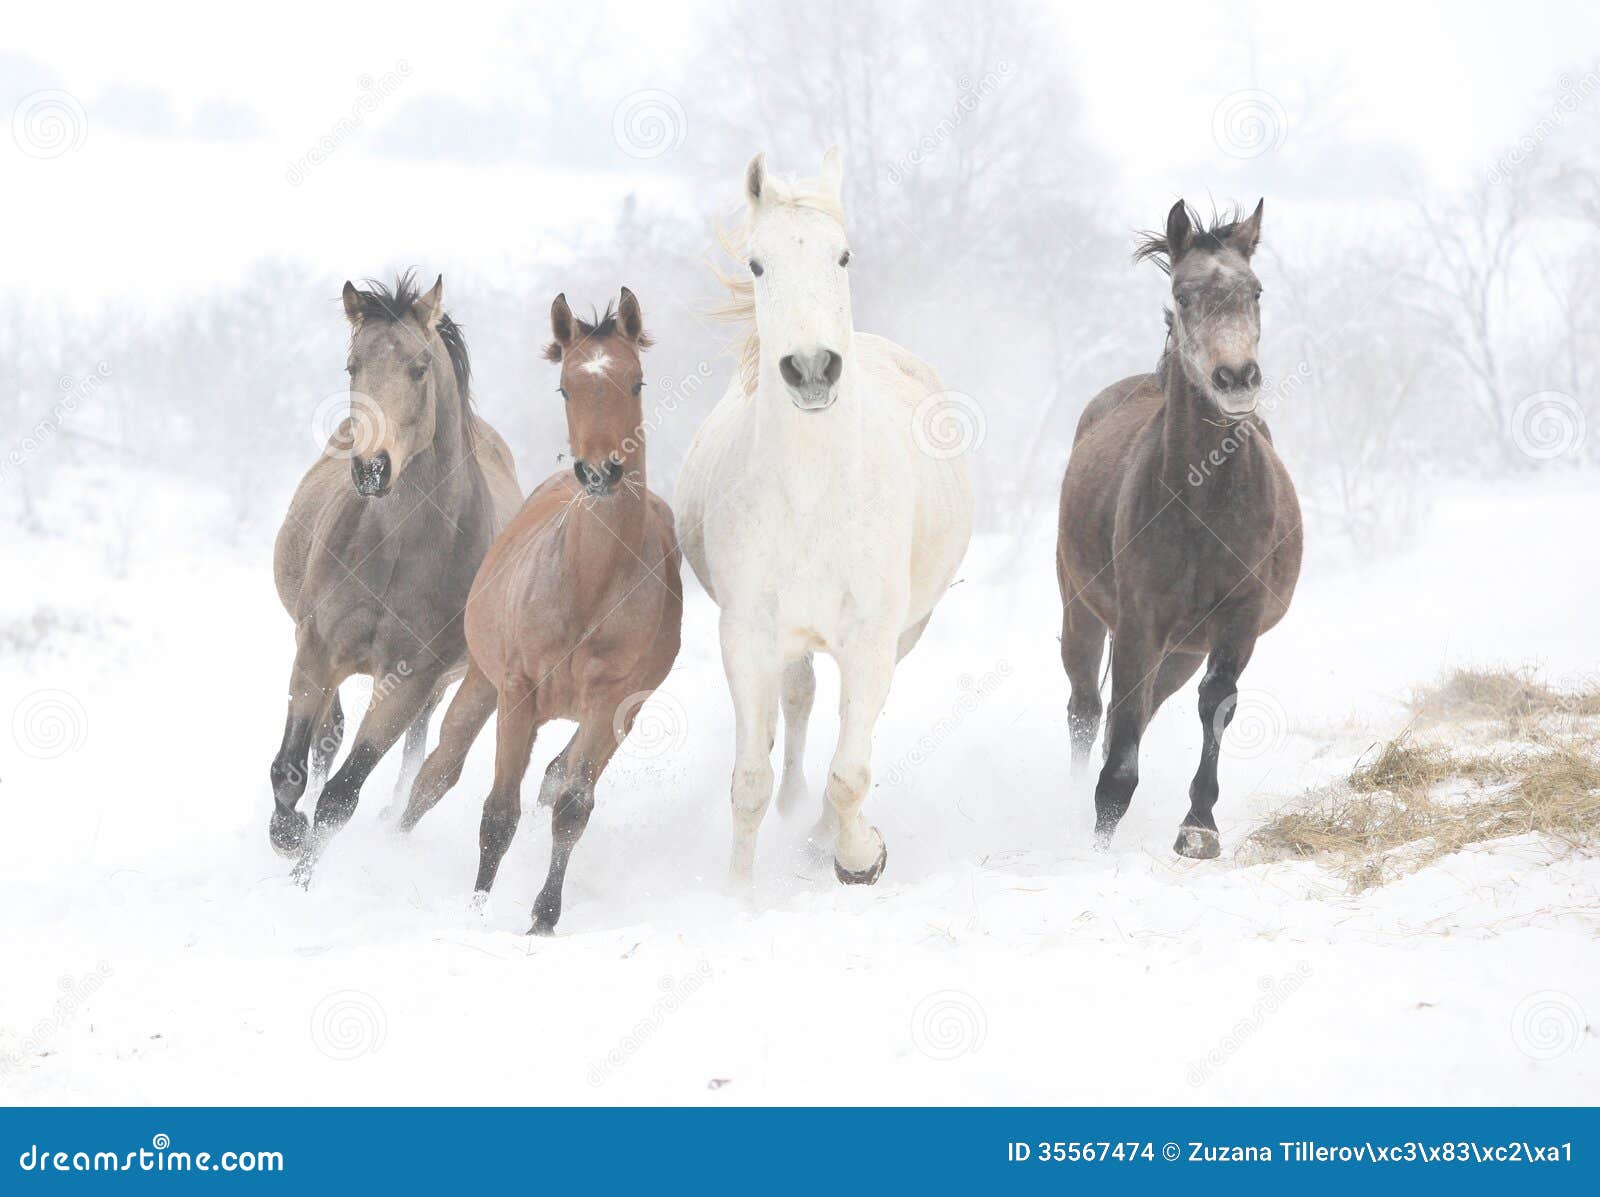 batch of horses running in winter